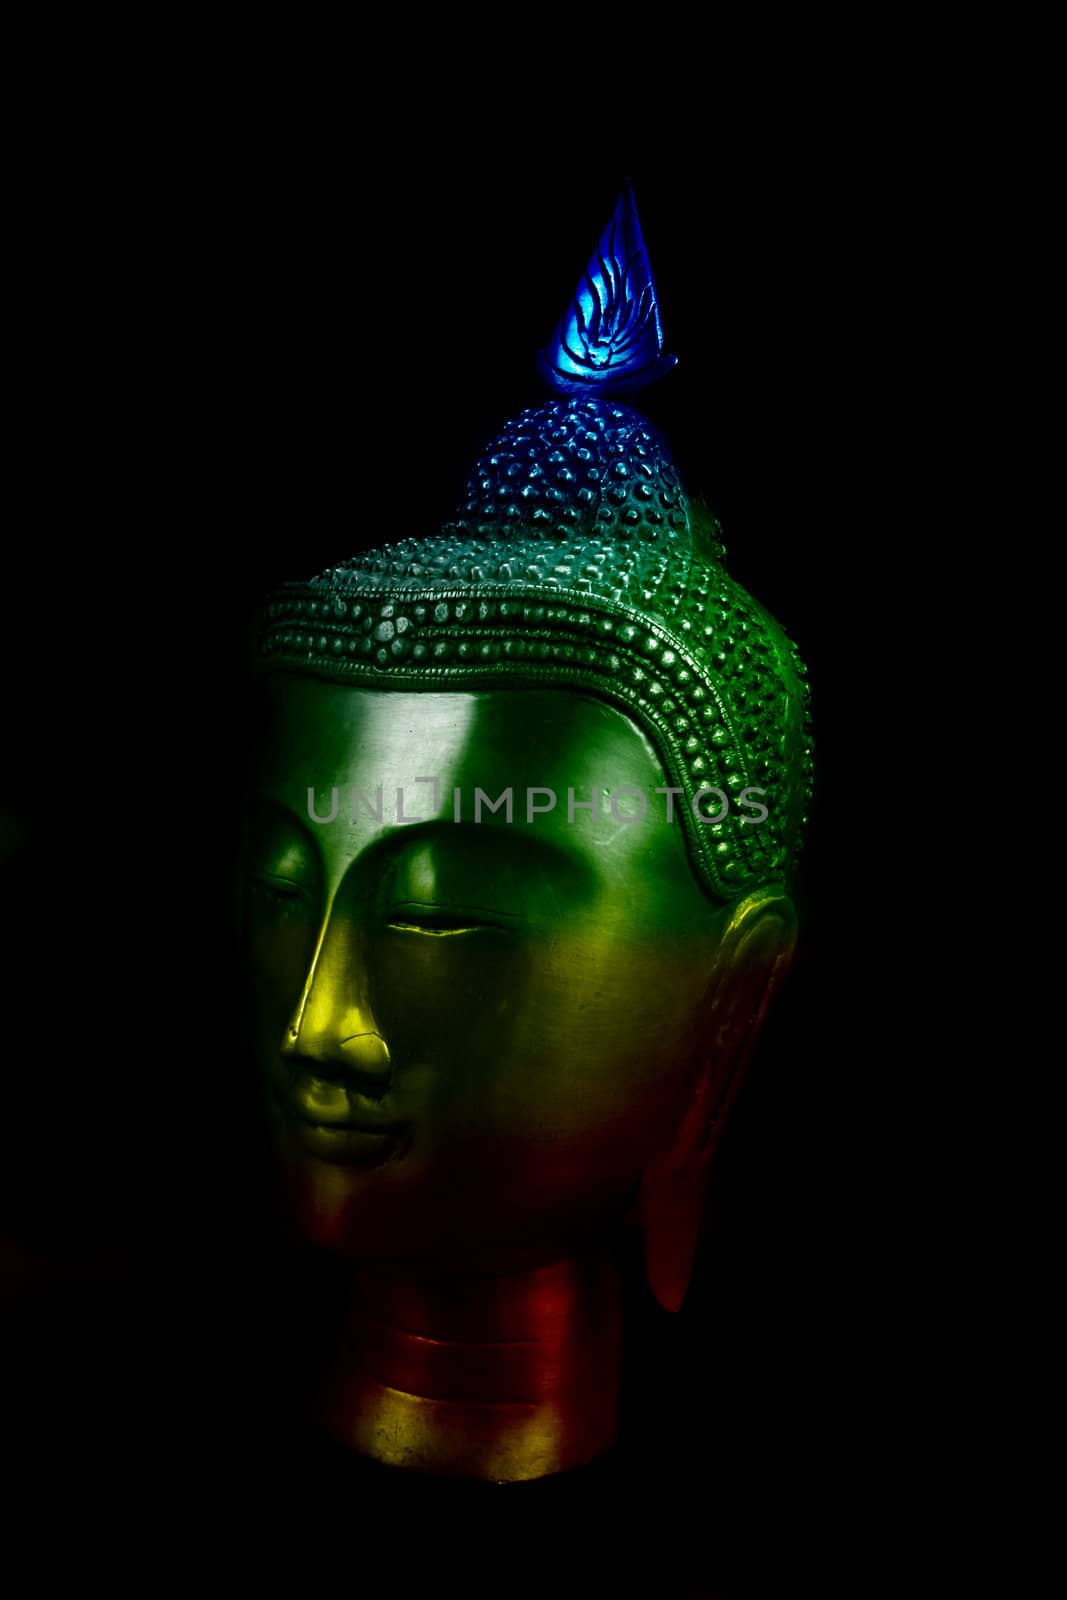 A metallic idol of a meditating Buddha in colorful light.